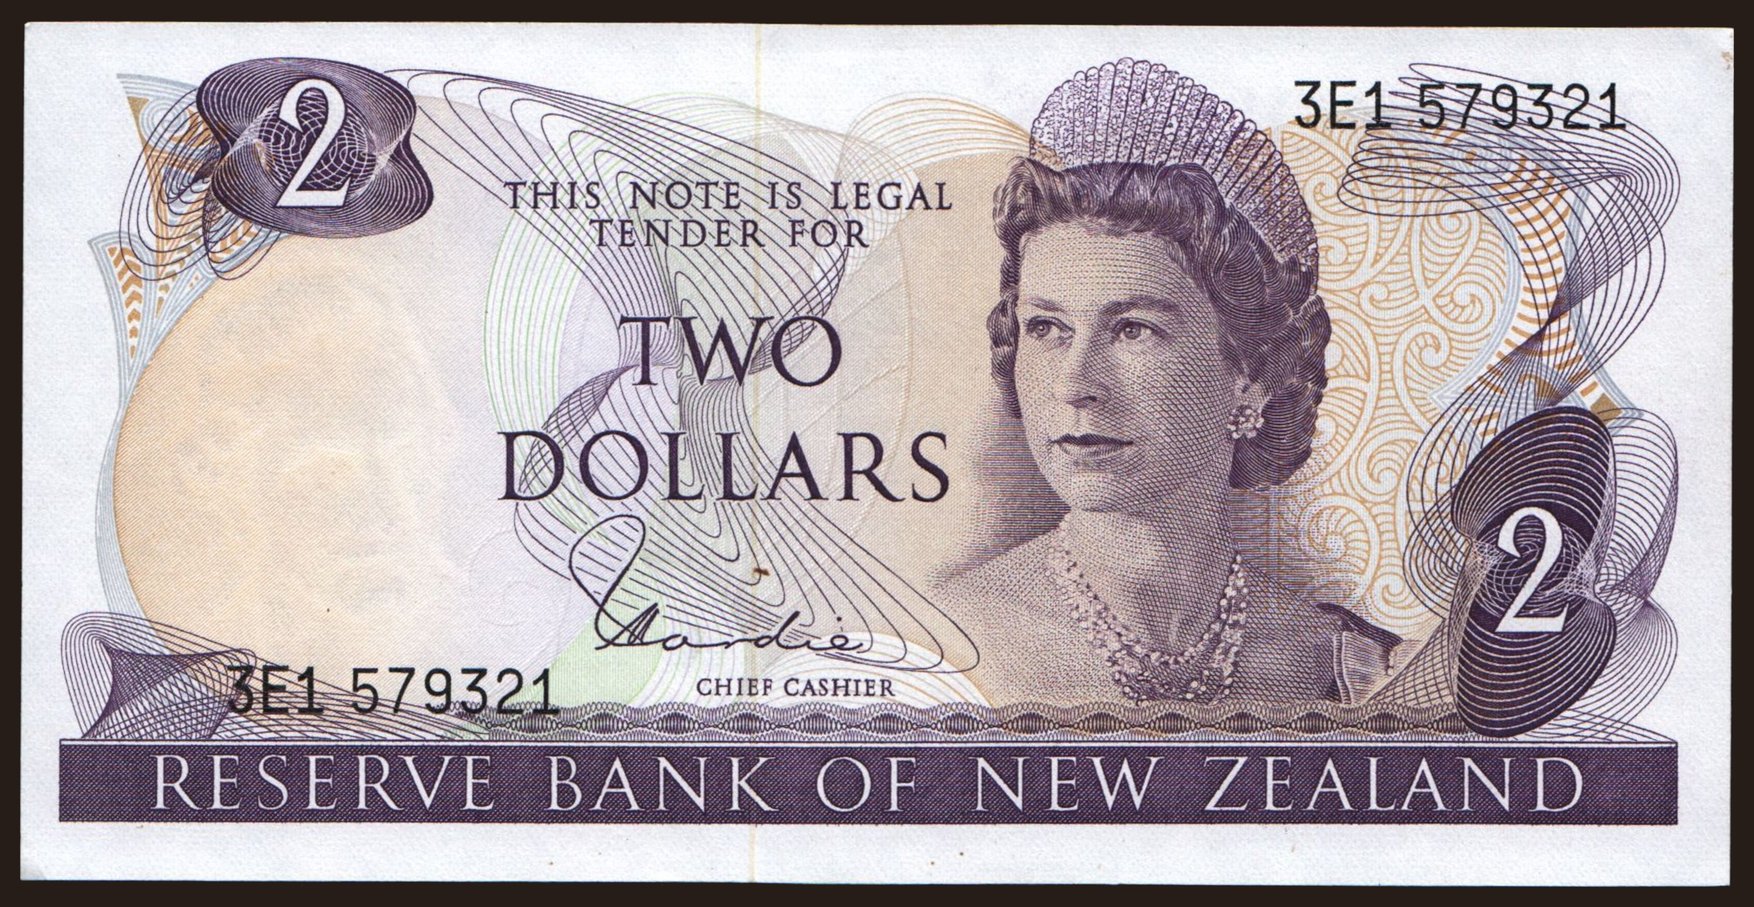 2 dollars, 1981